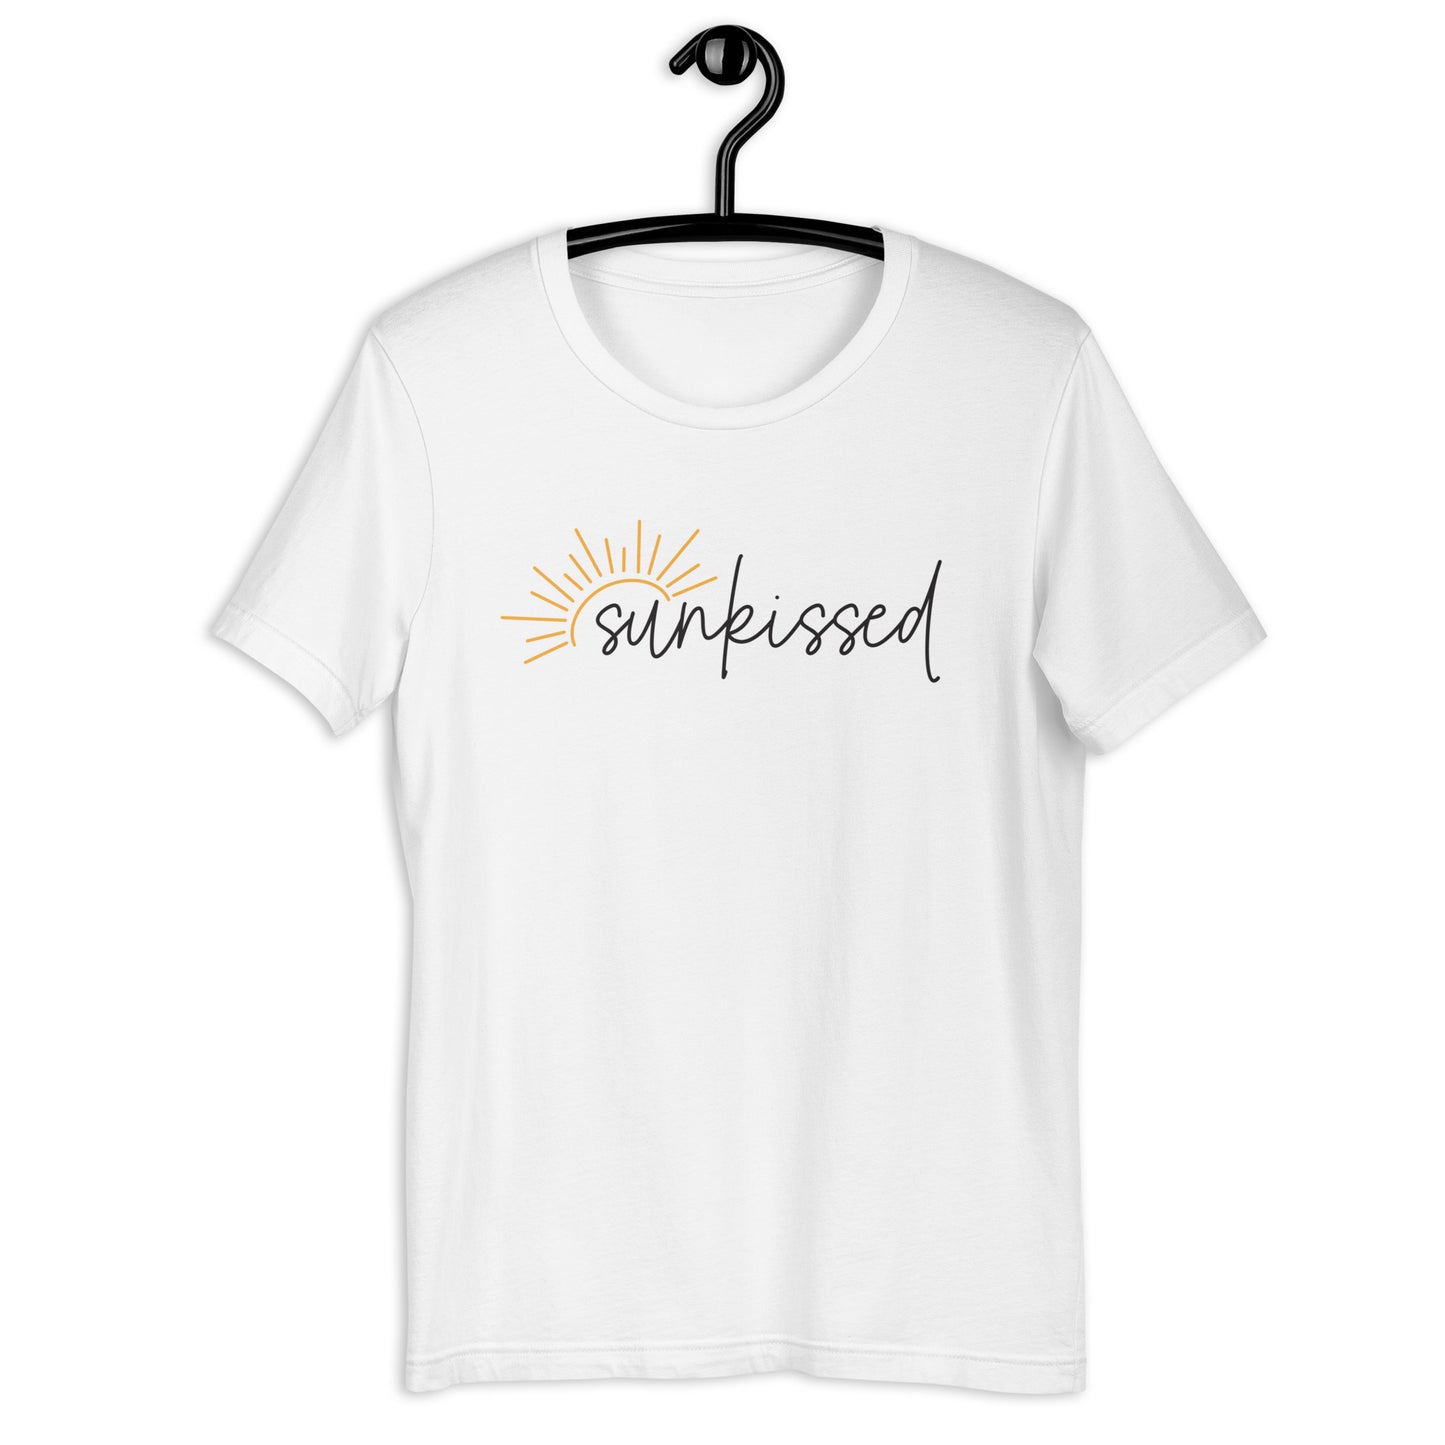 Sunkissed - Unisex t-shirt